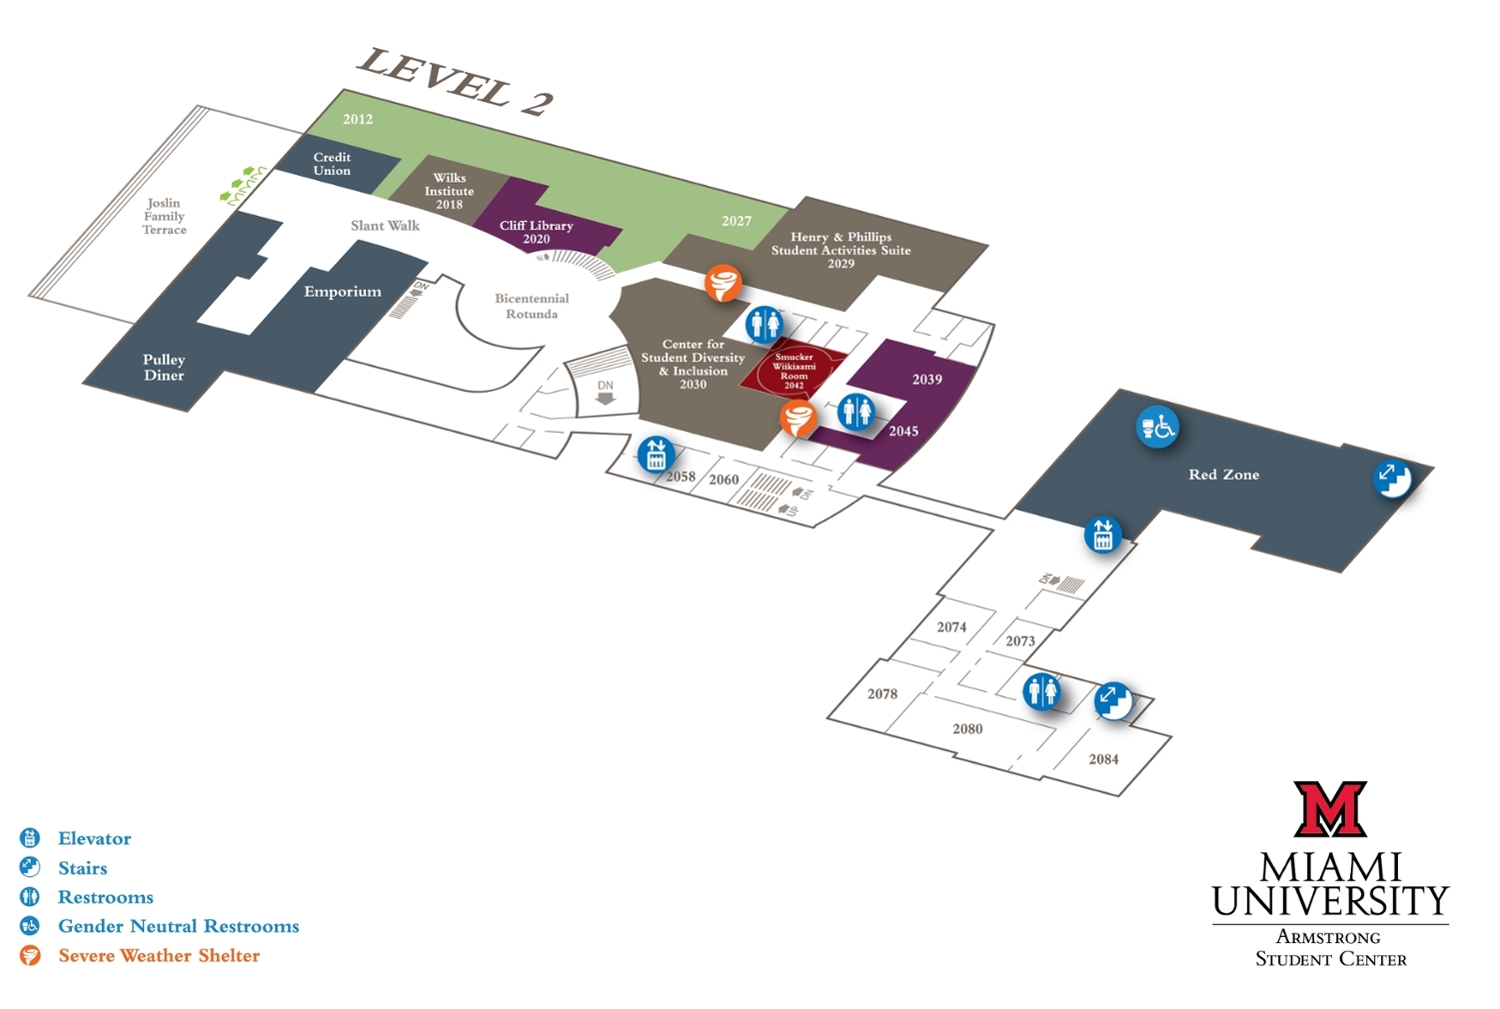 Level 2 Floor plan as described above. 